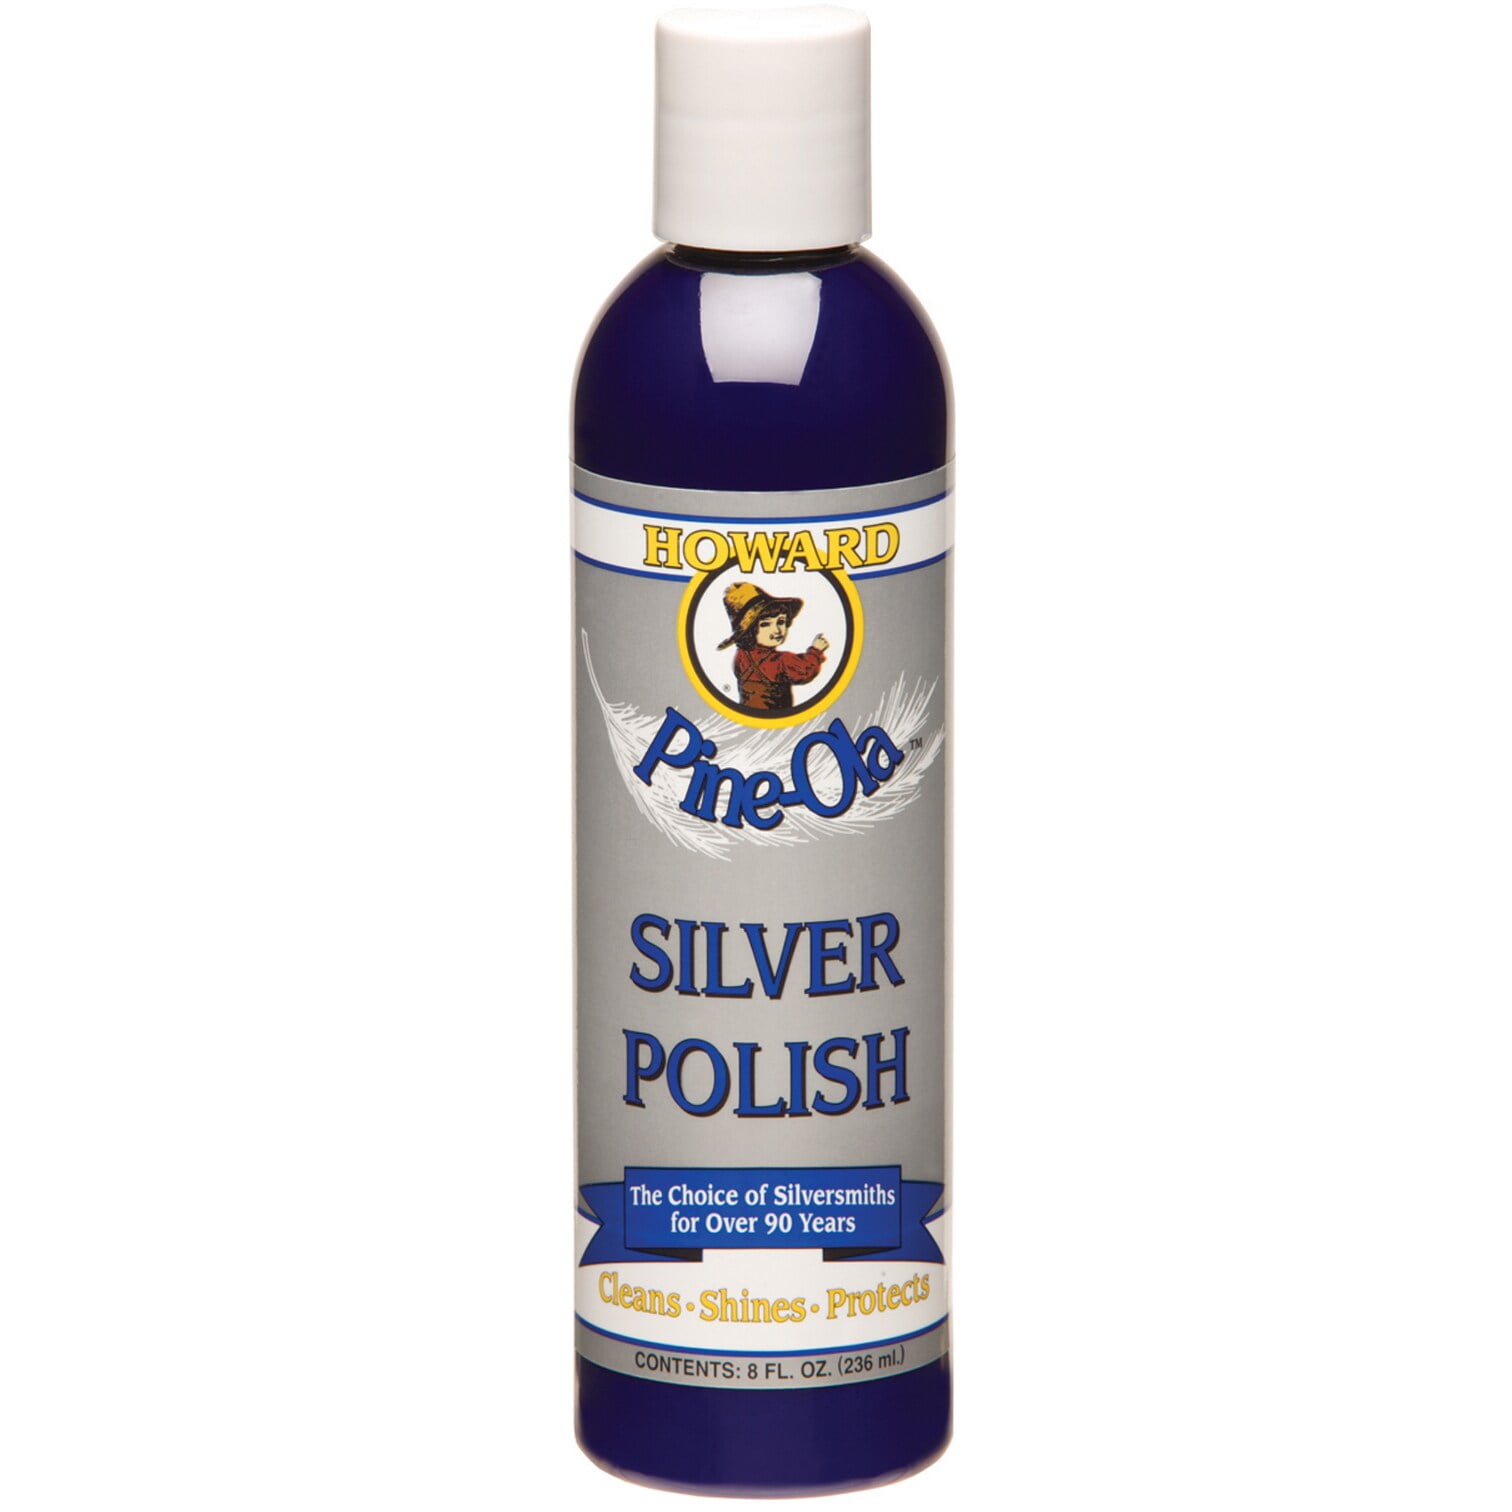  Connoisseurs Silver Polish Liquid Polilsh : Health & Household